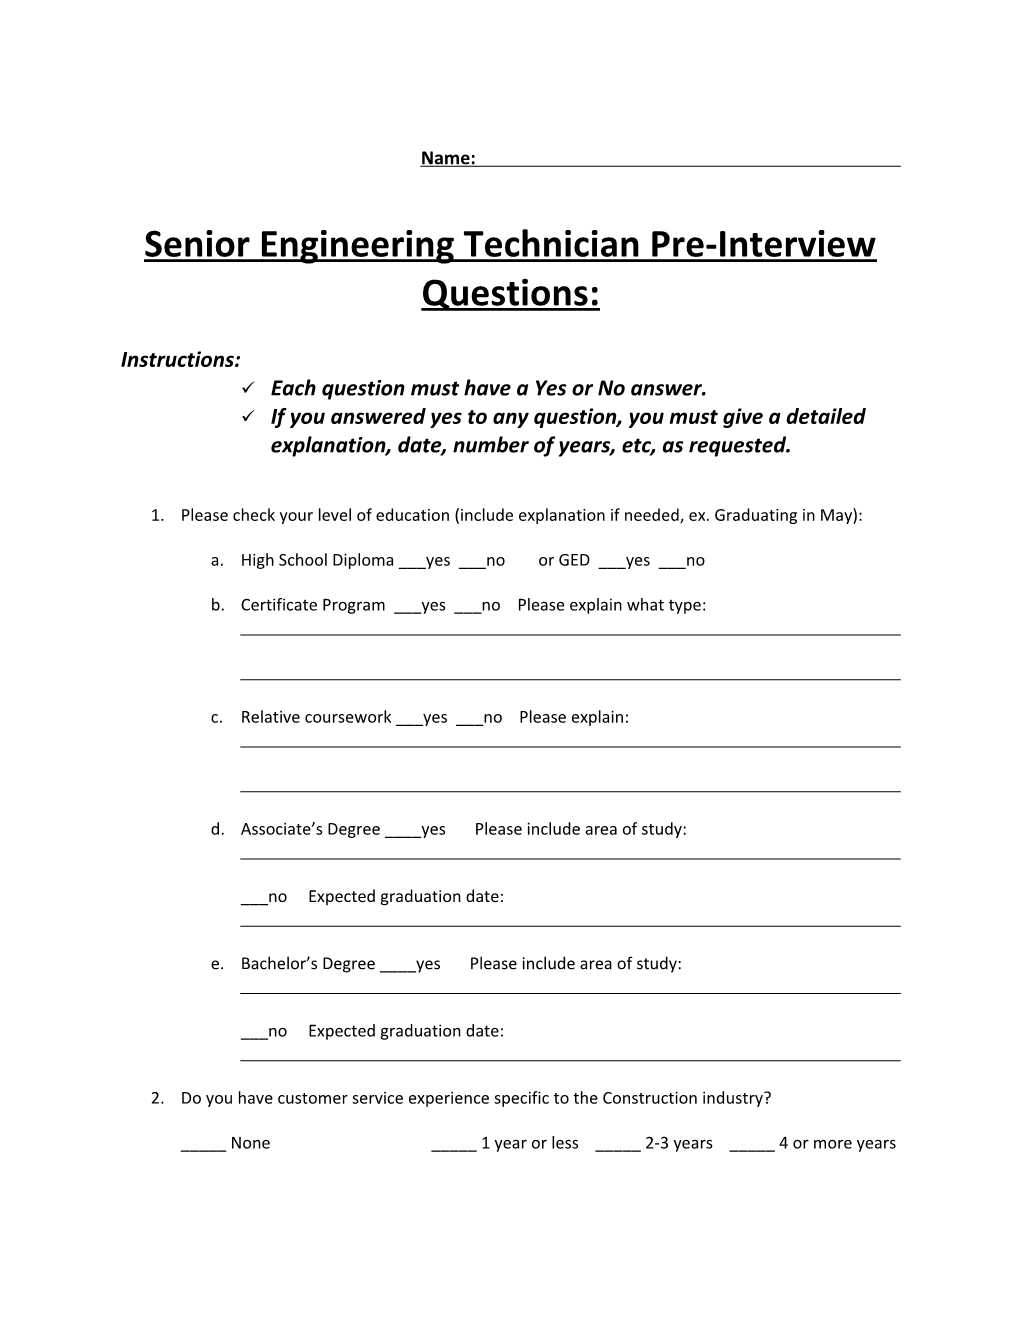 Senior Engineering Technician Pre-Interview Questions